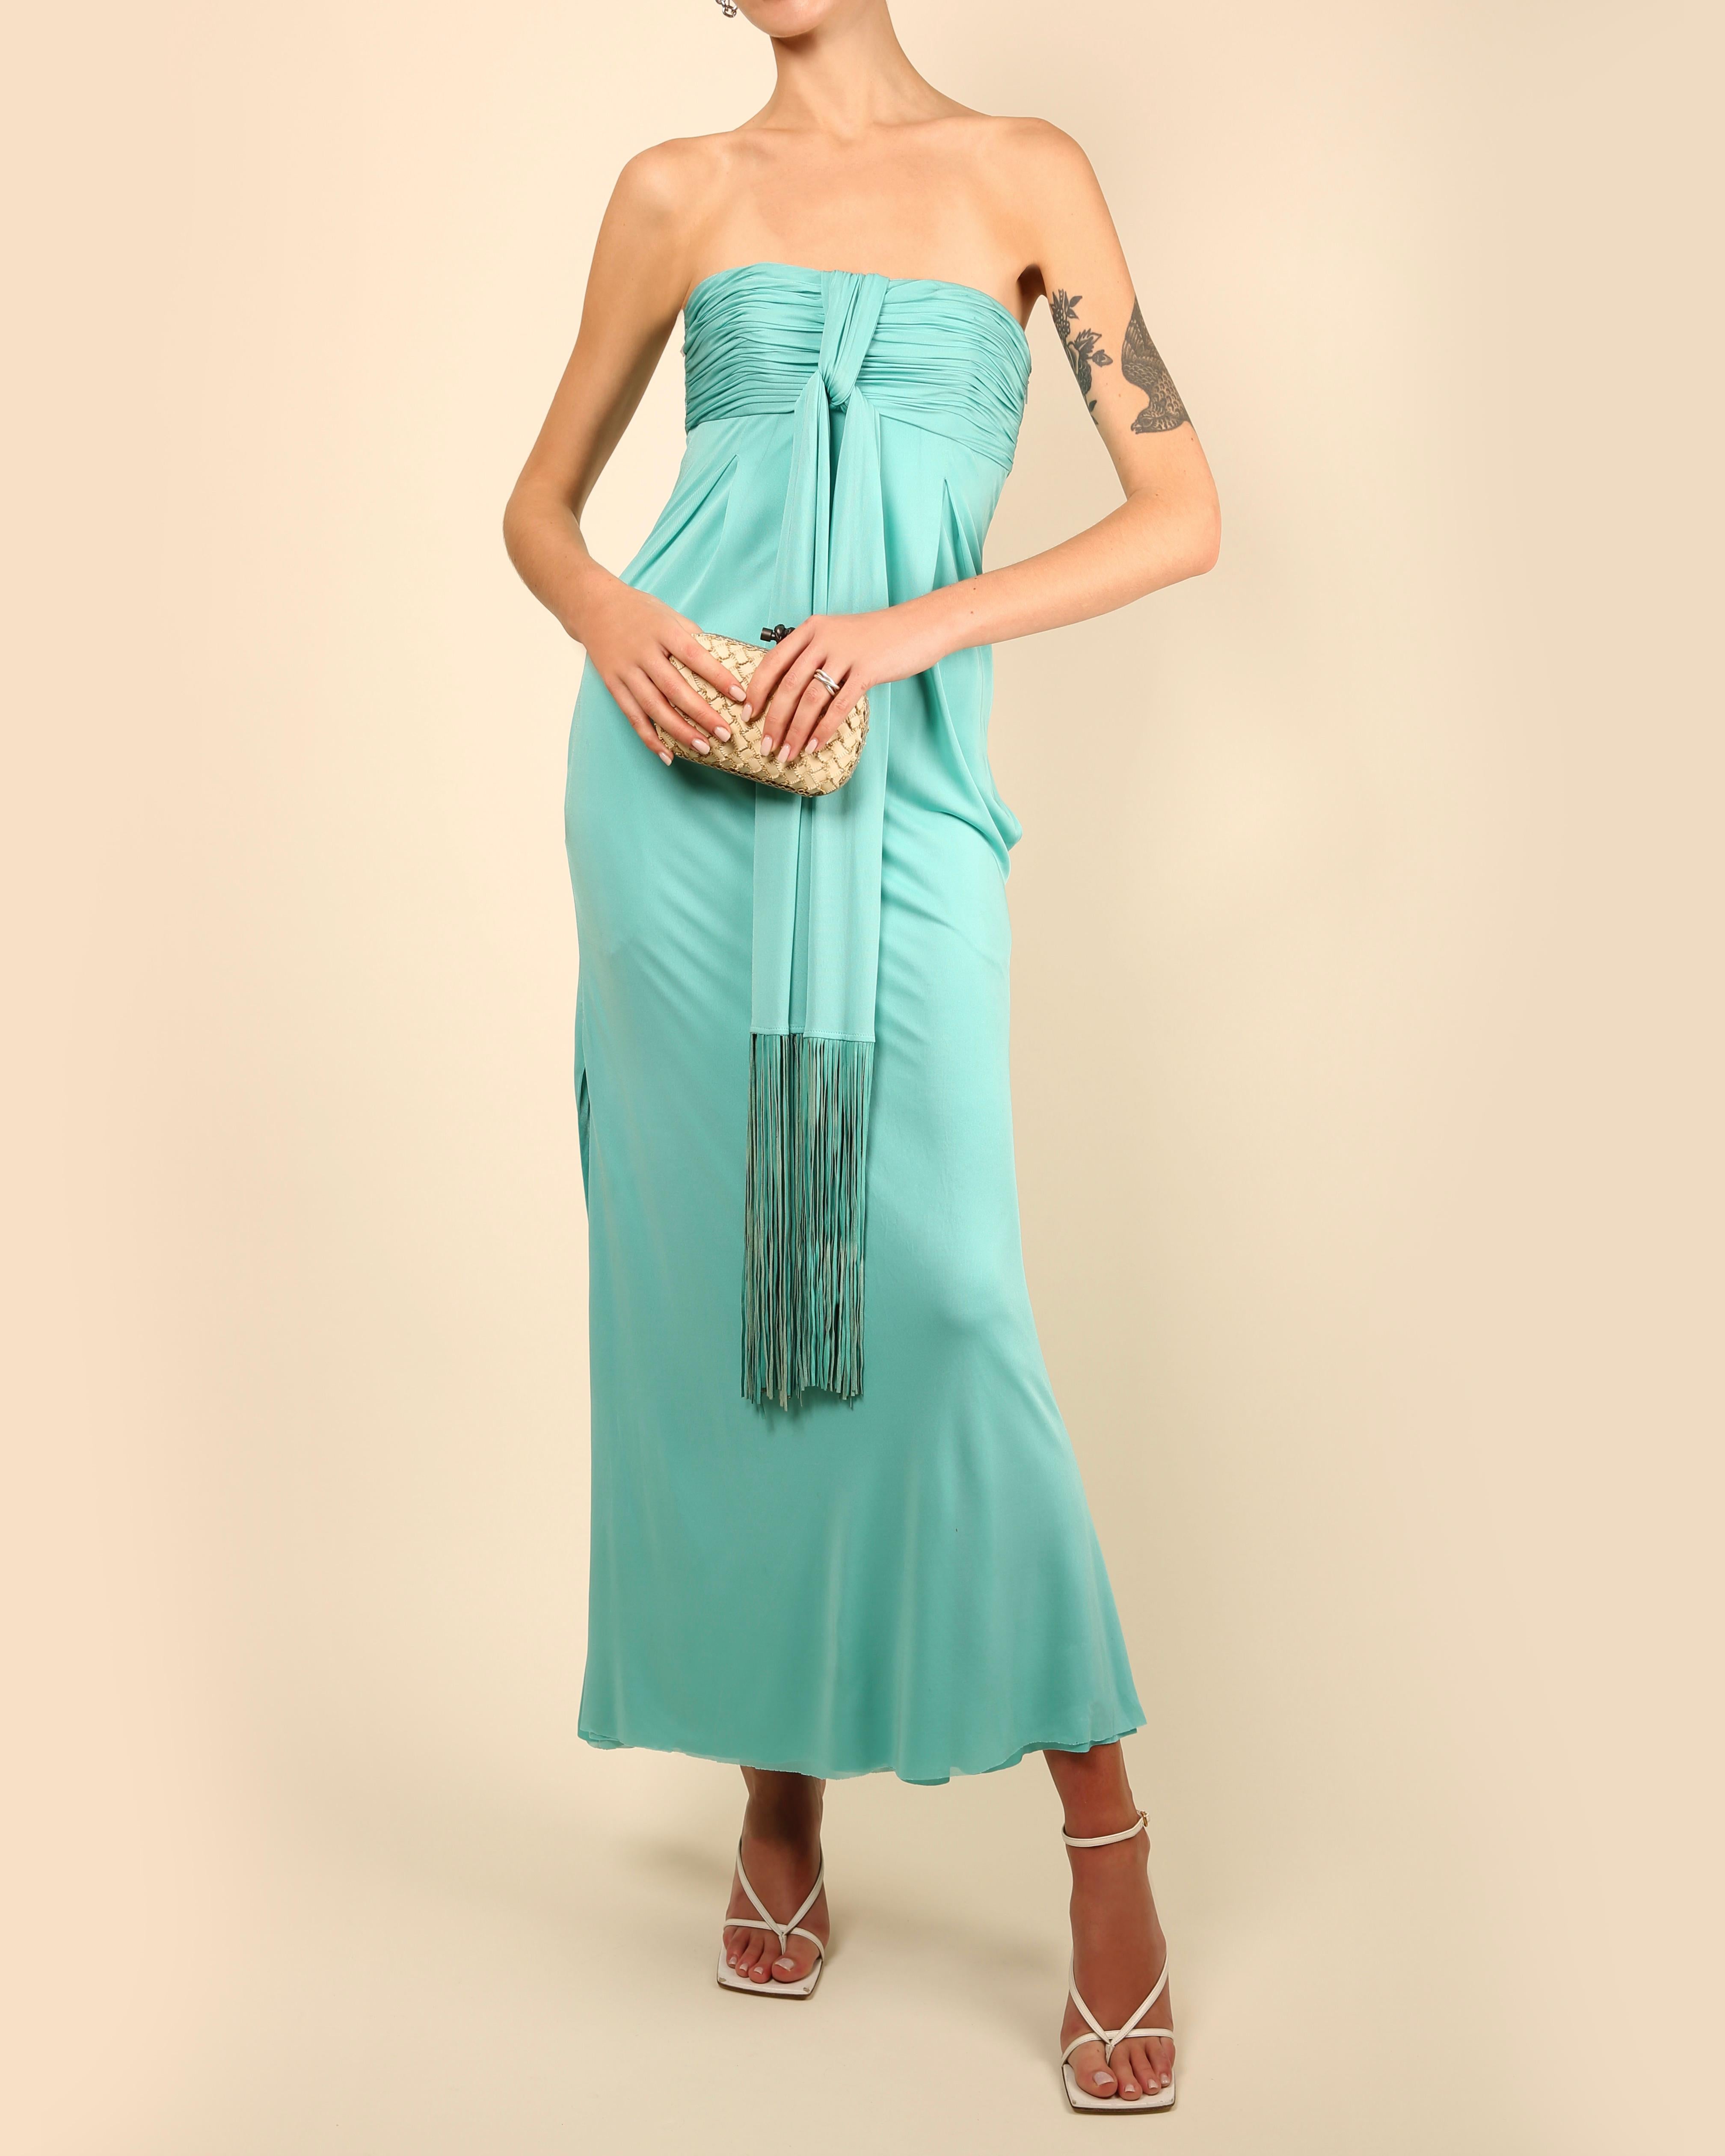 versace turquoise dress